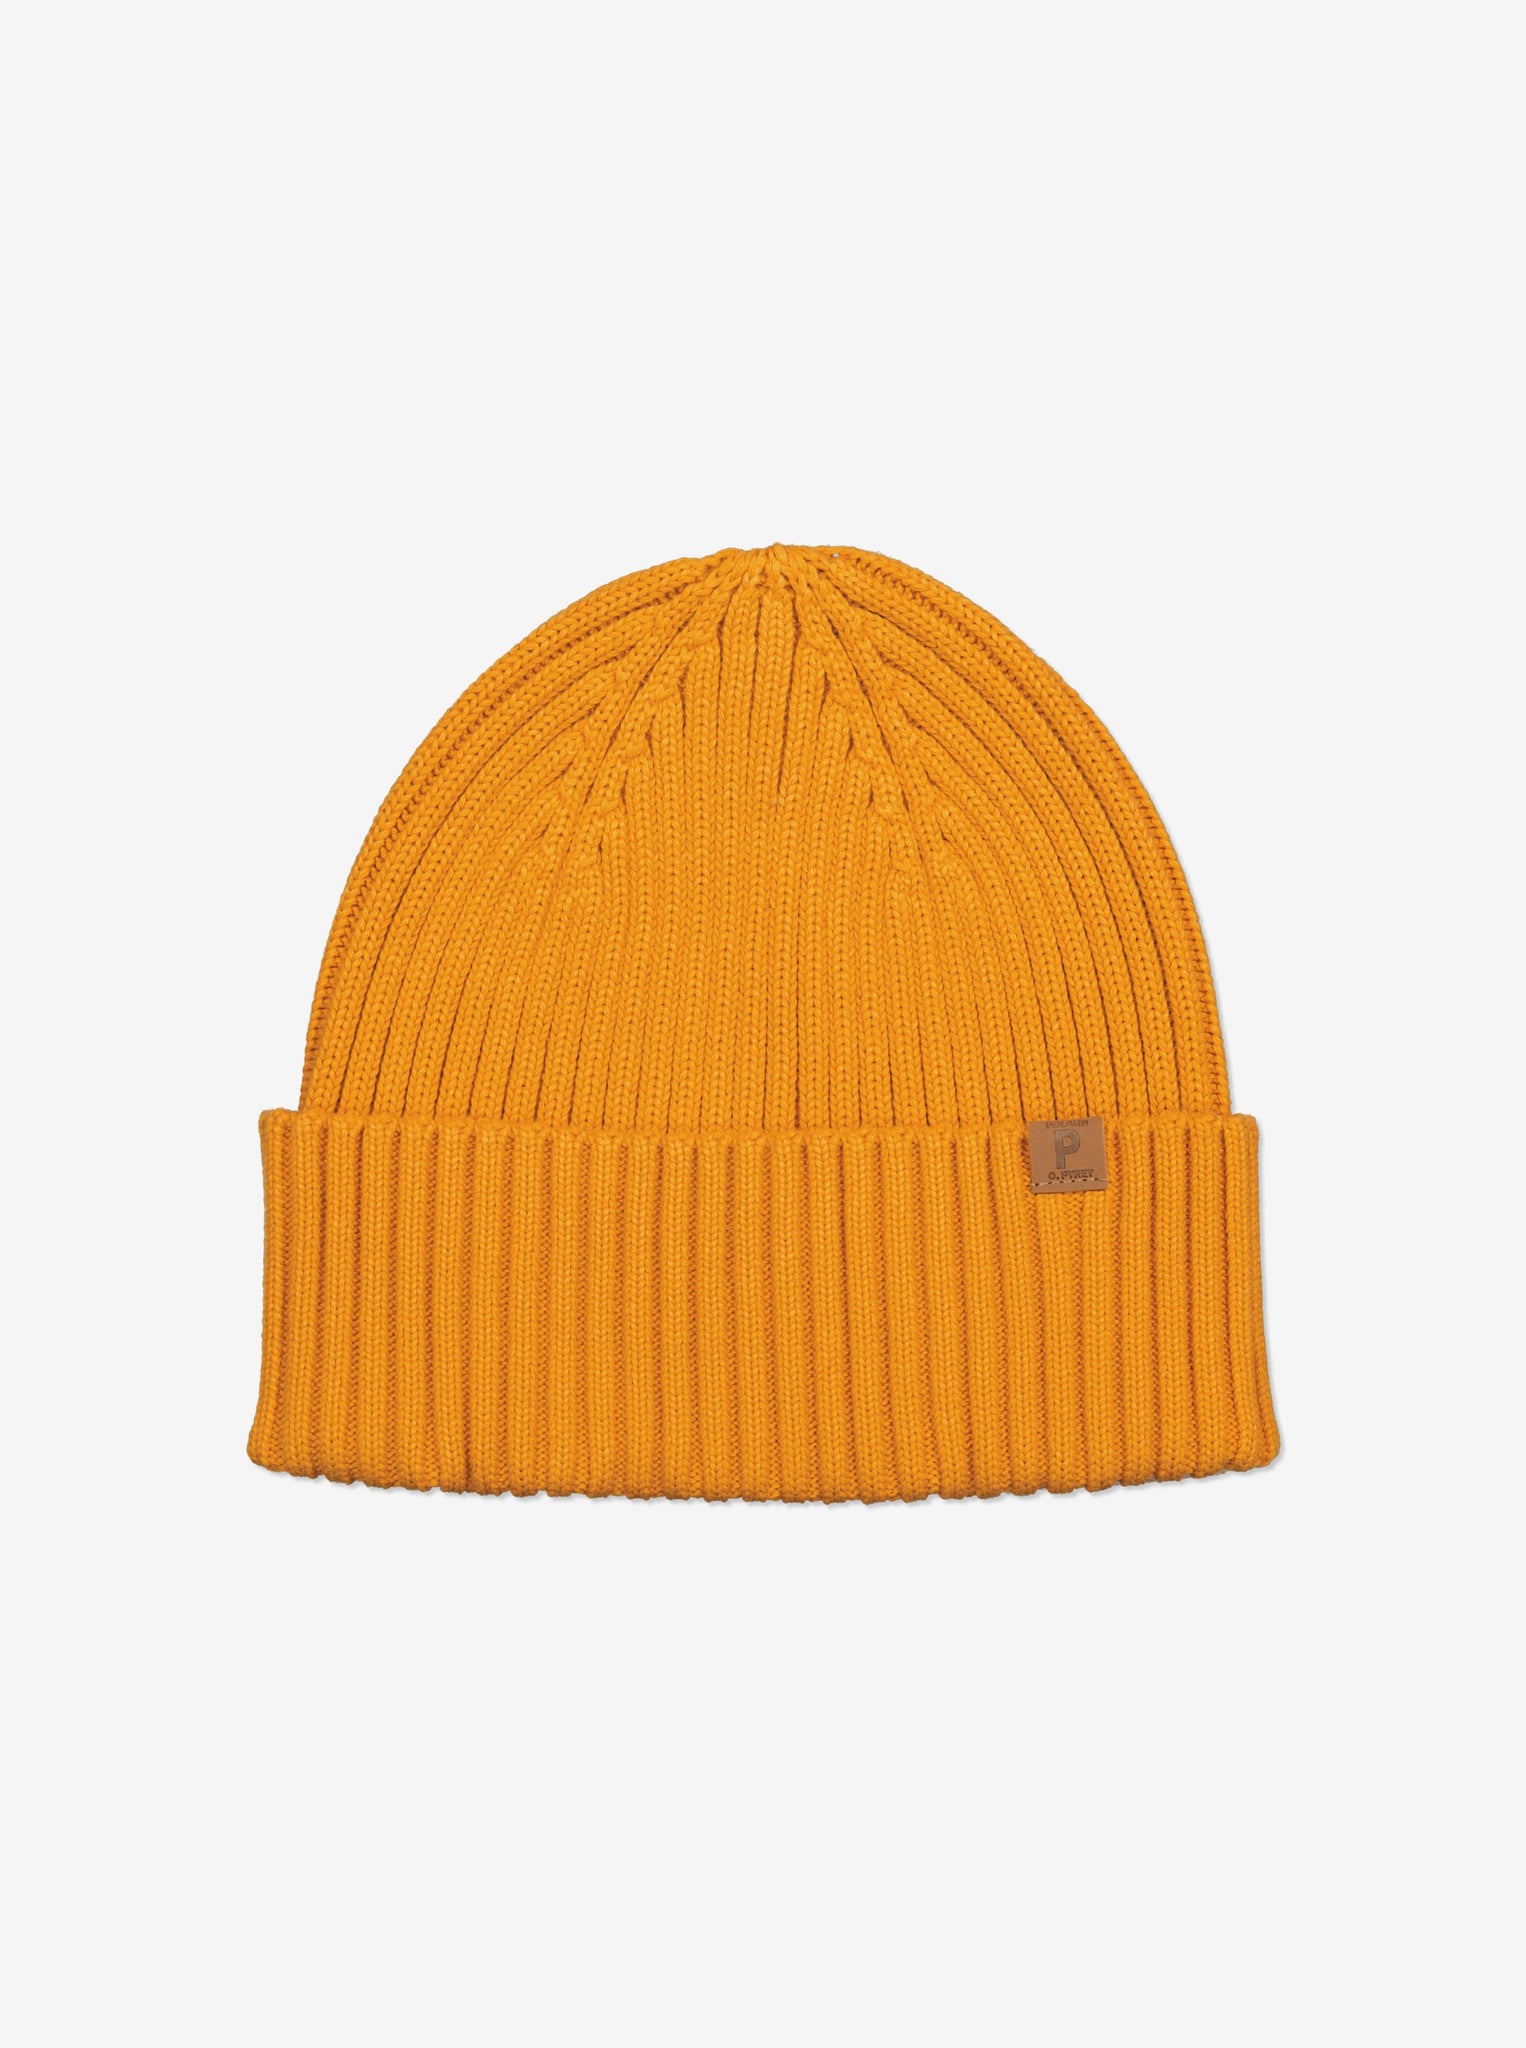 Yellow Kids Knitted Beanie Hat from Polarn O. Pyret Kidswear. Warm kids beanie